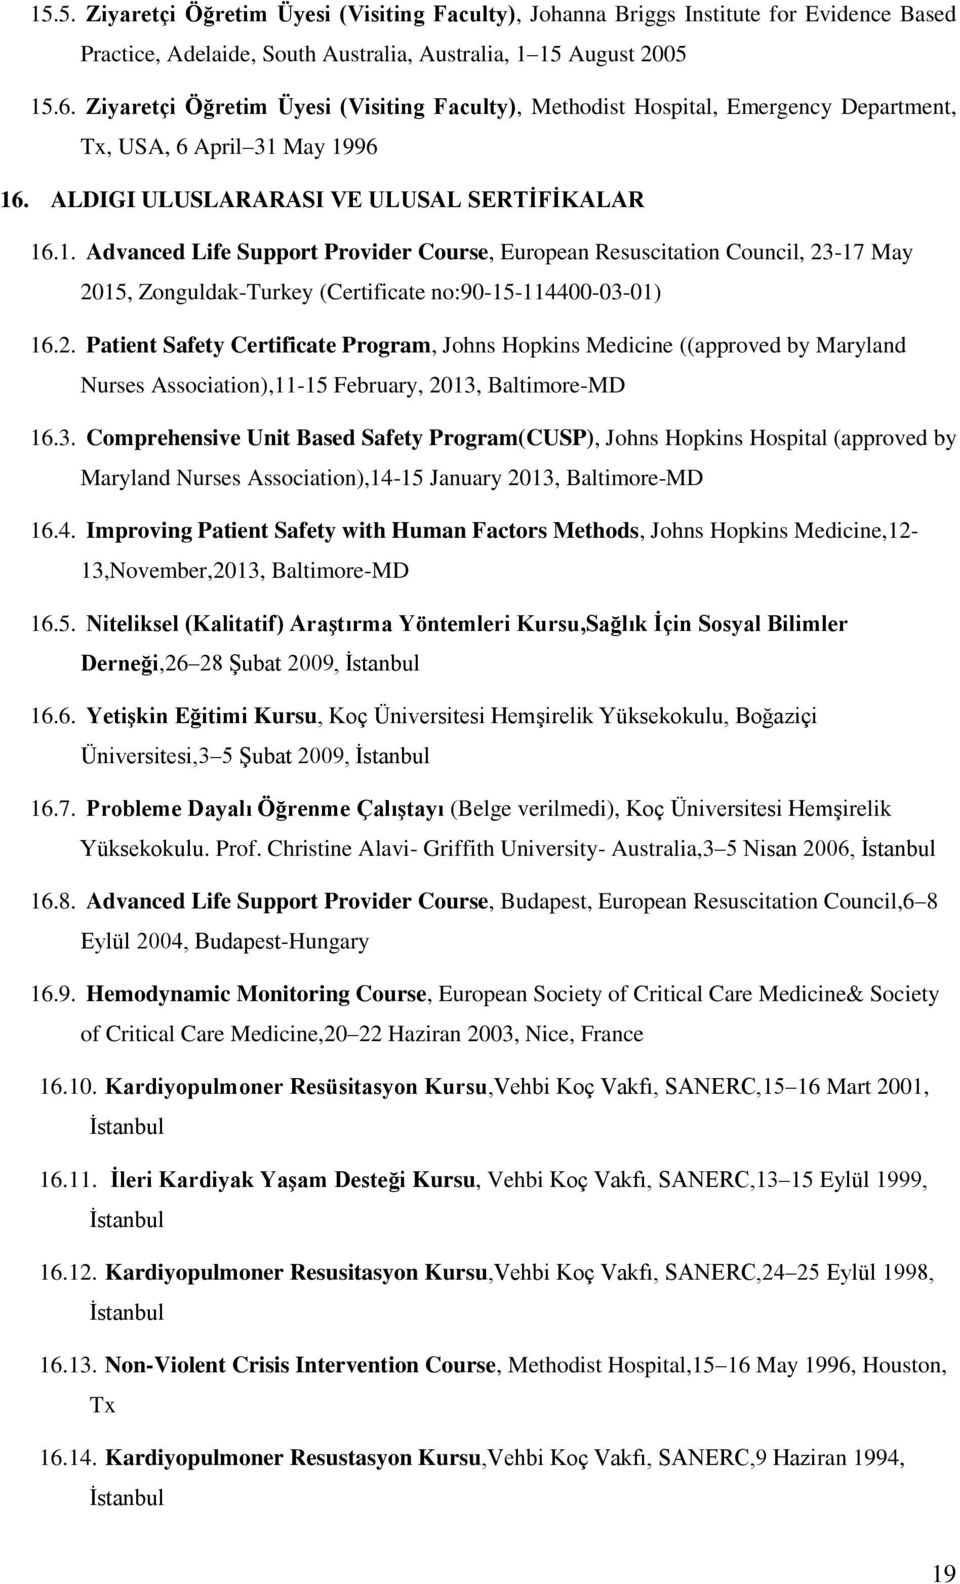 May 1996 16. ALDIGI ULUSLARARASI VE ULUSAL SERTİFİKALAR 16.1. Advanced Life Support Provider Course, European Resuscitation Council, 23-17 May 2015, Zonguldak-Turkey (Certificate no:90-15-114400-03-01) 16.